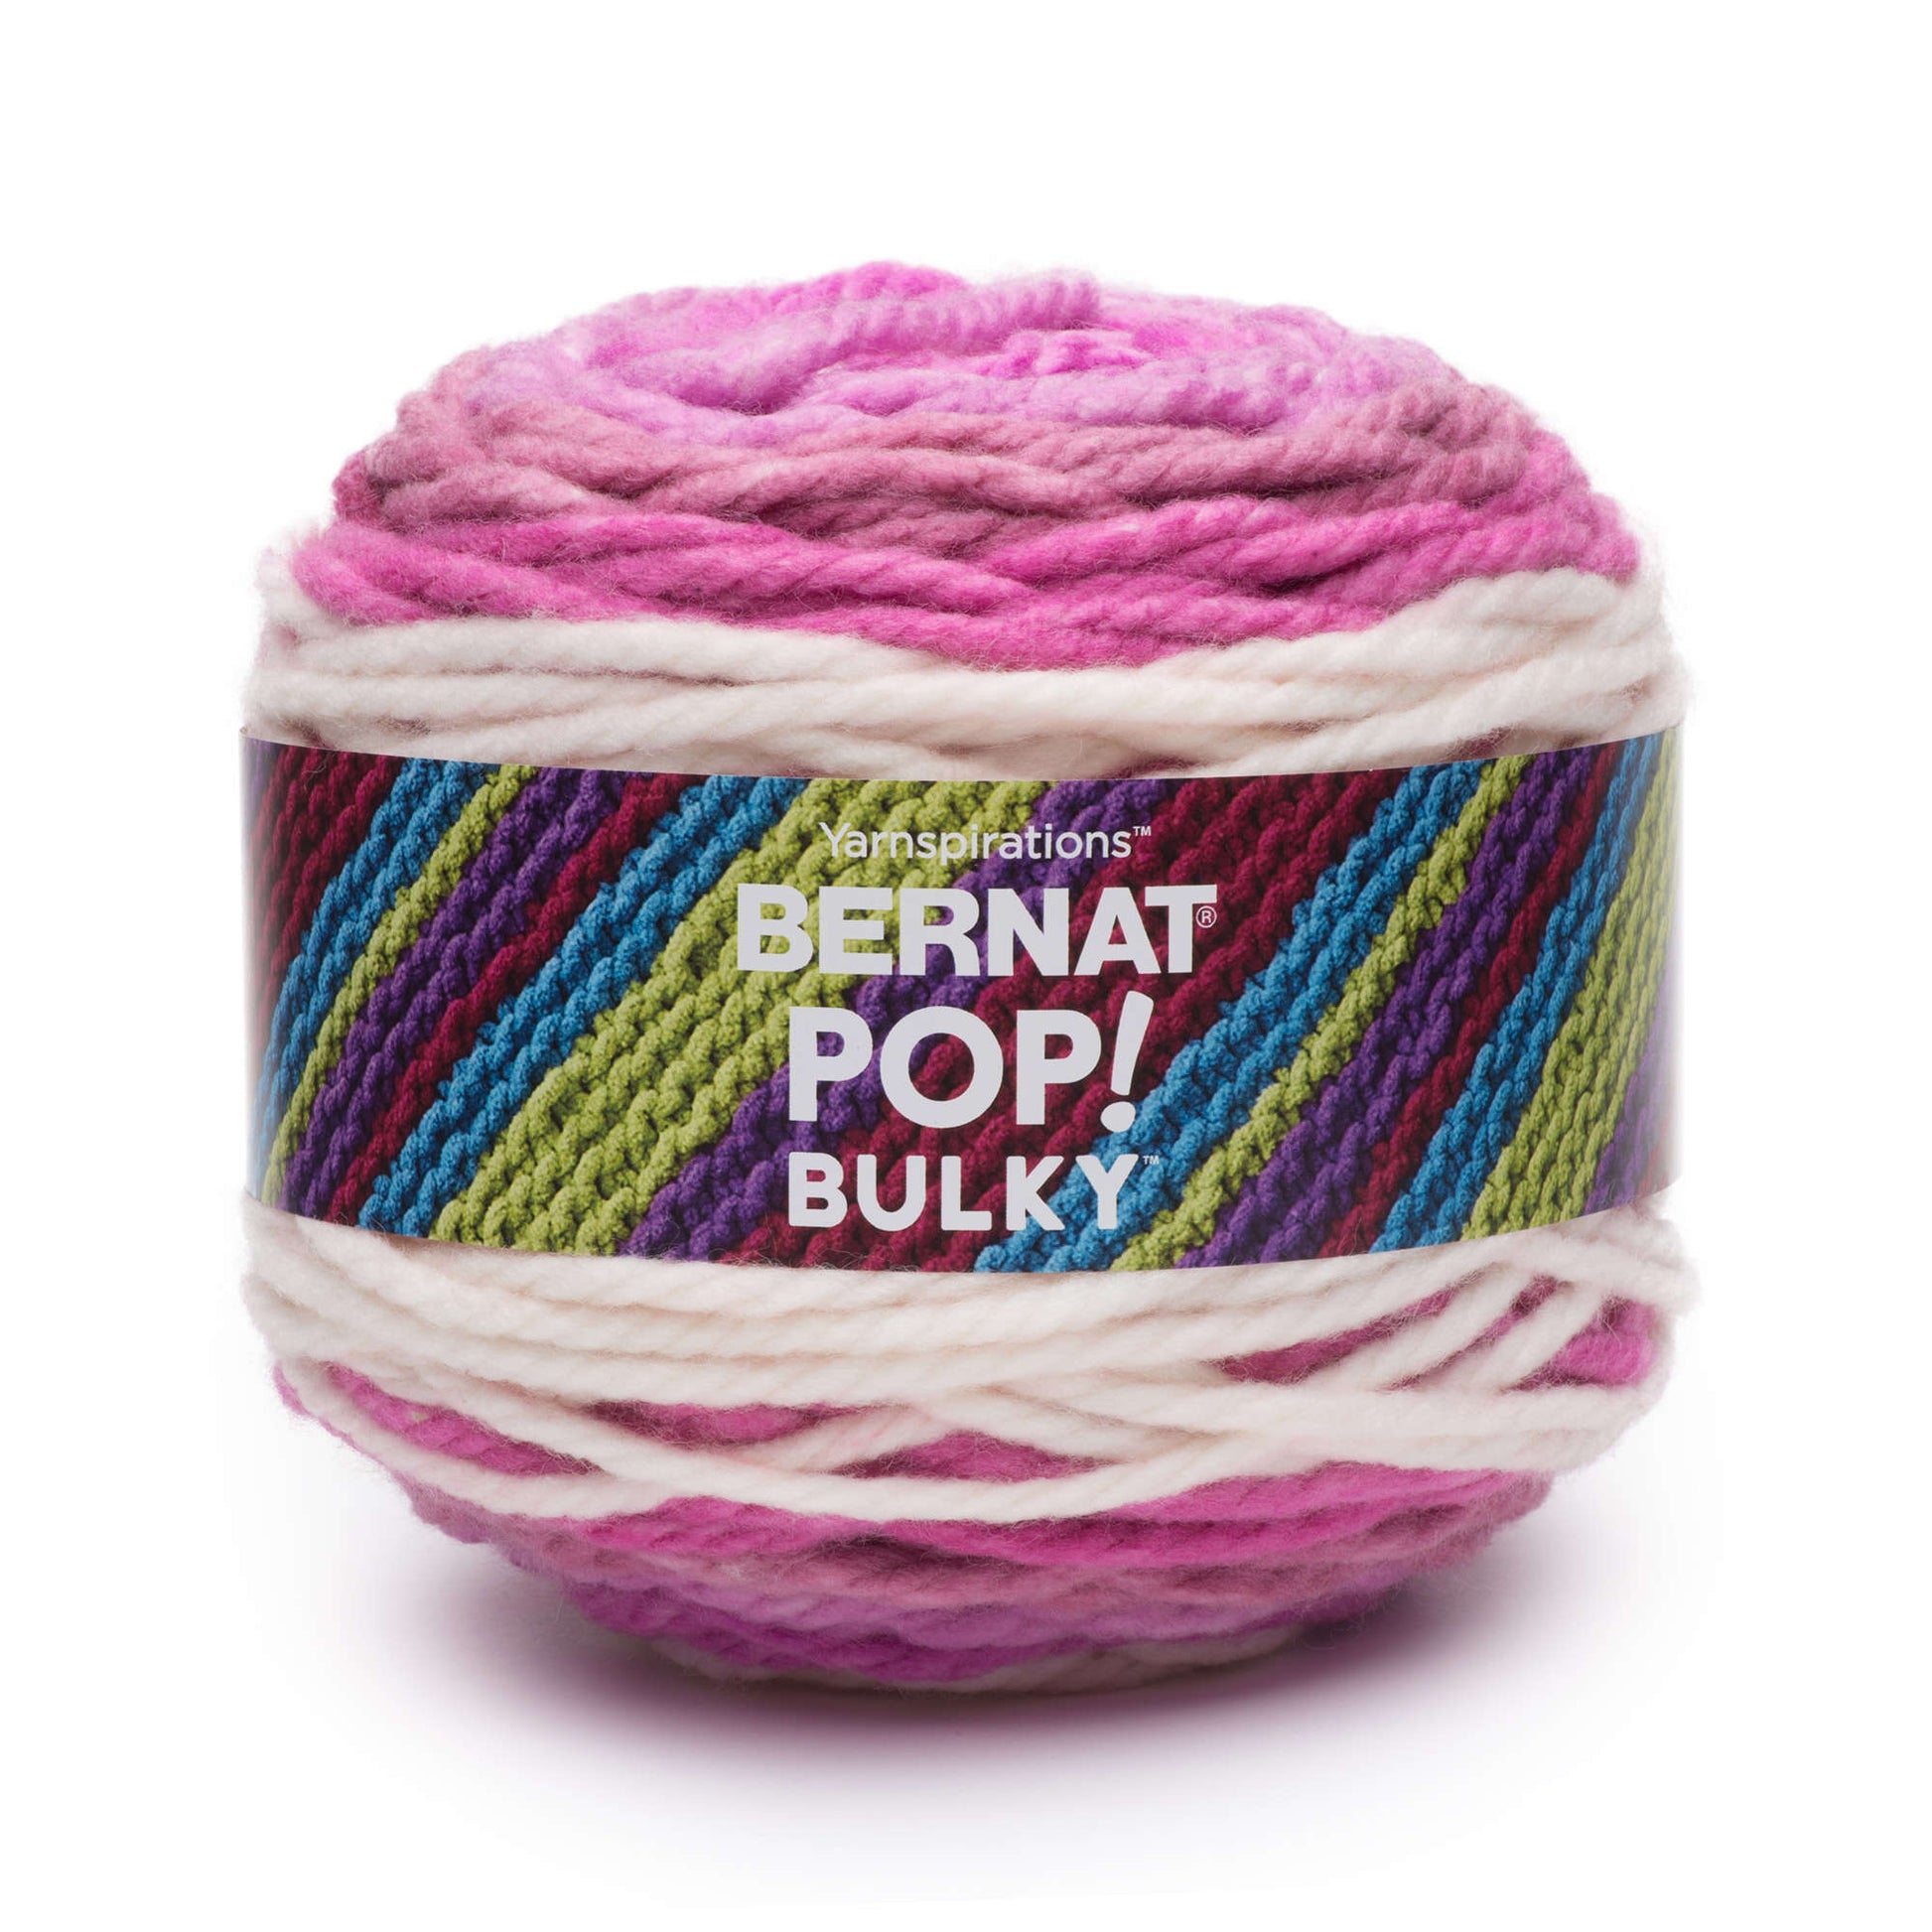 Bernat Pop! Bulky Yarn - Clearance Shades*